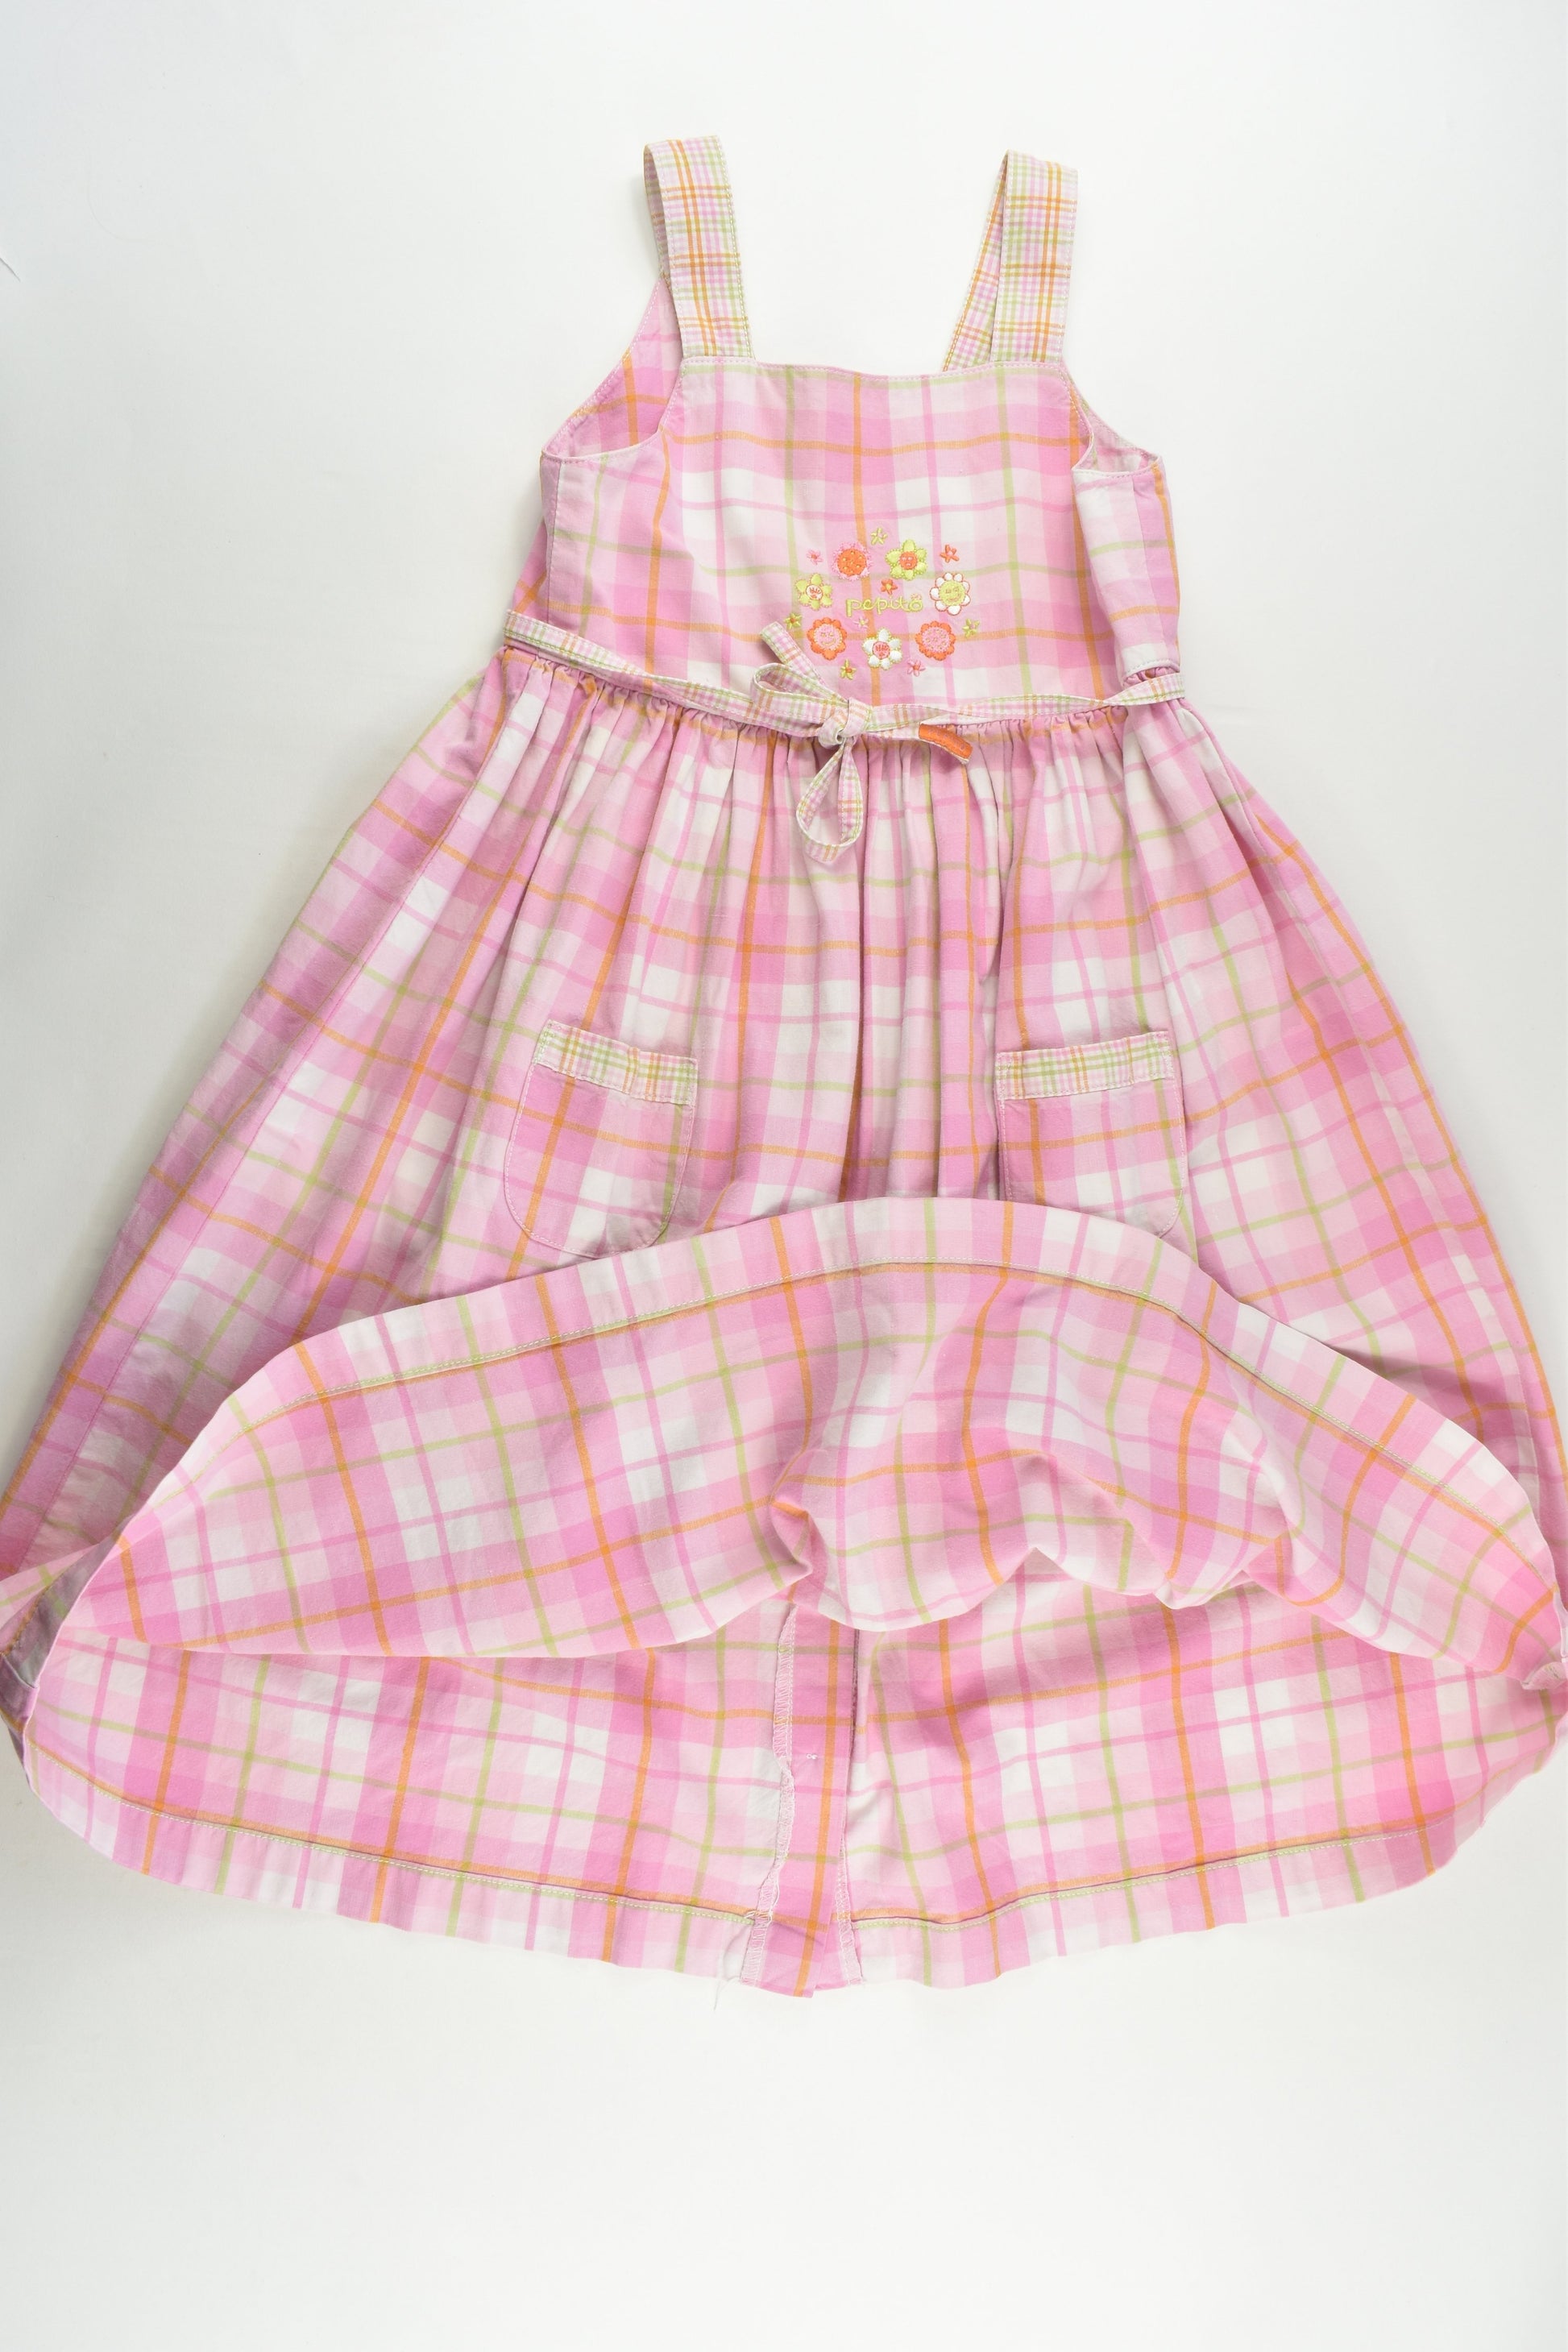 Pepito Australia Size 5 Vintage Checked Dress